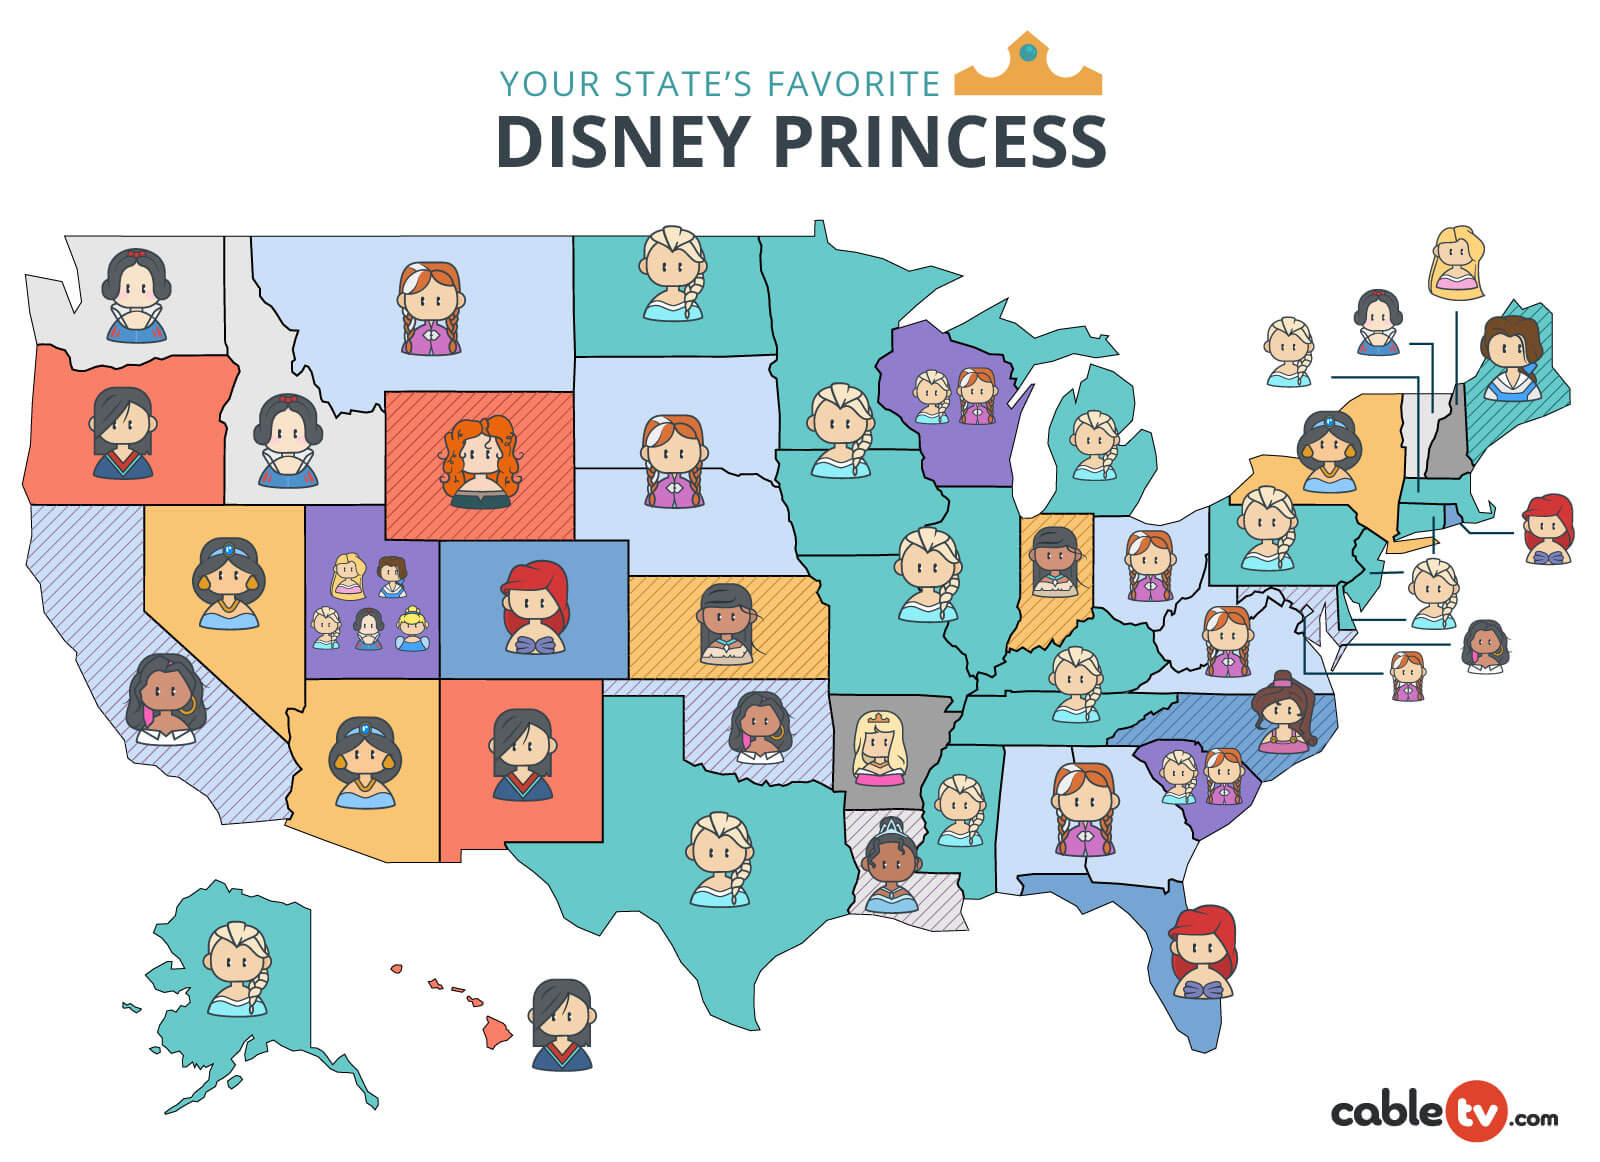 Every state's favorite Disney princes.